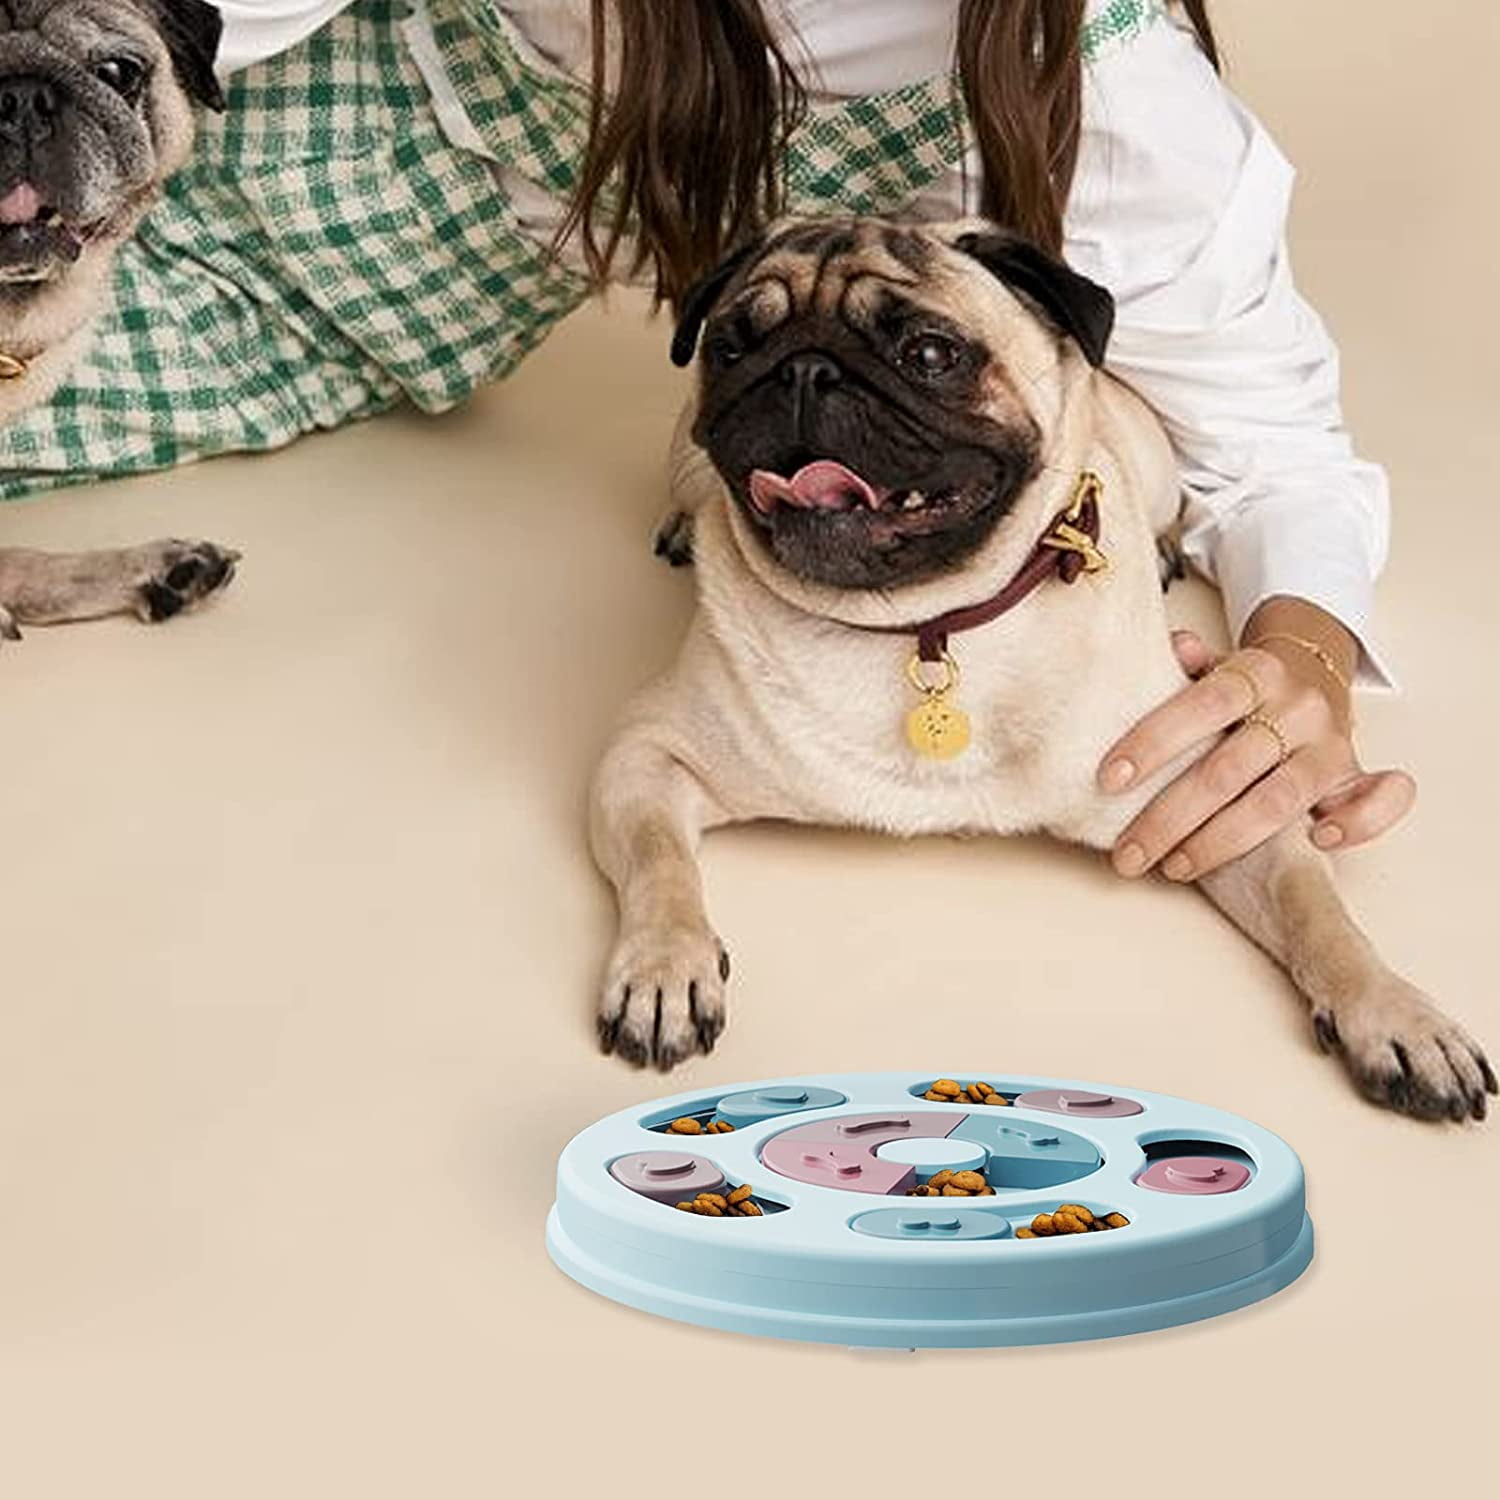 25 Holes Smart Paws Interactive Pet Puzzle Toys, Level 2 Dog Slow Feeder,Dog Puzzle Feeder,Rabbit Toy